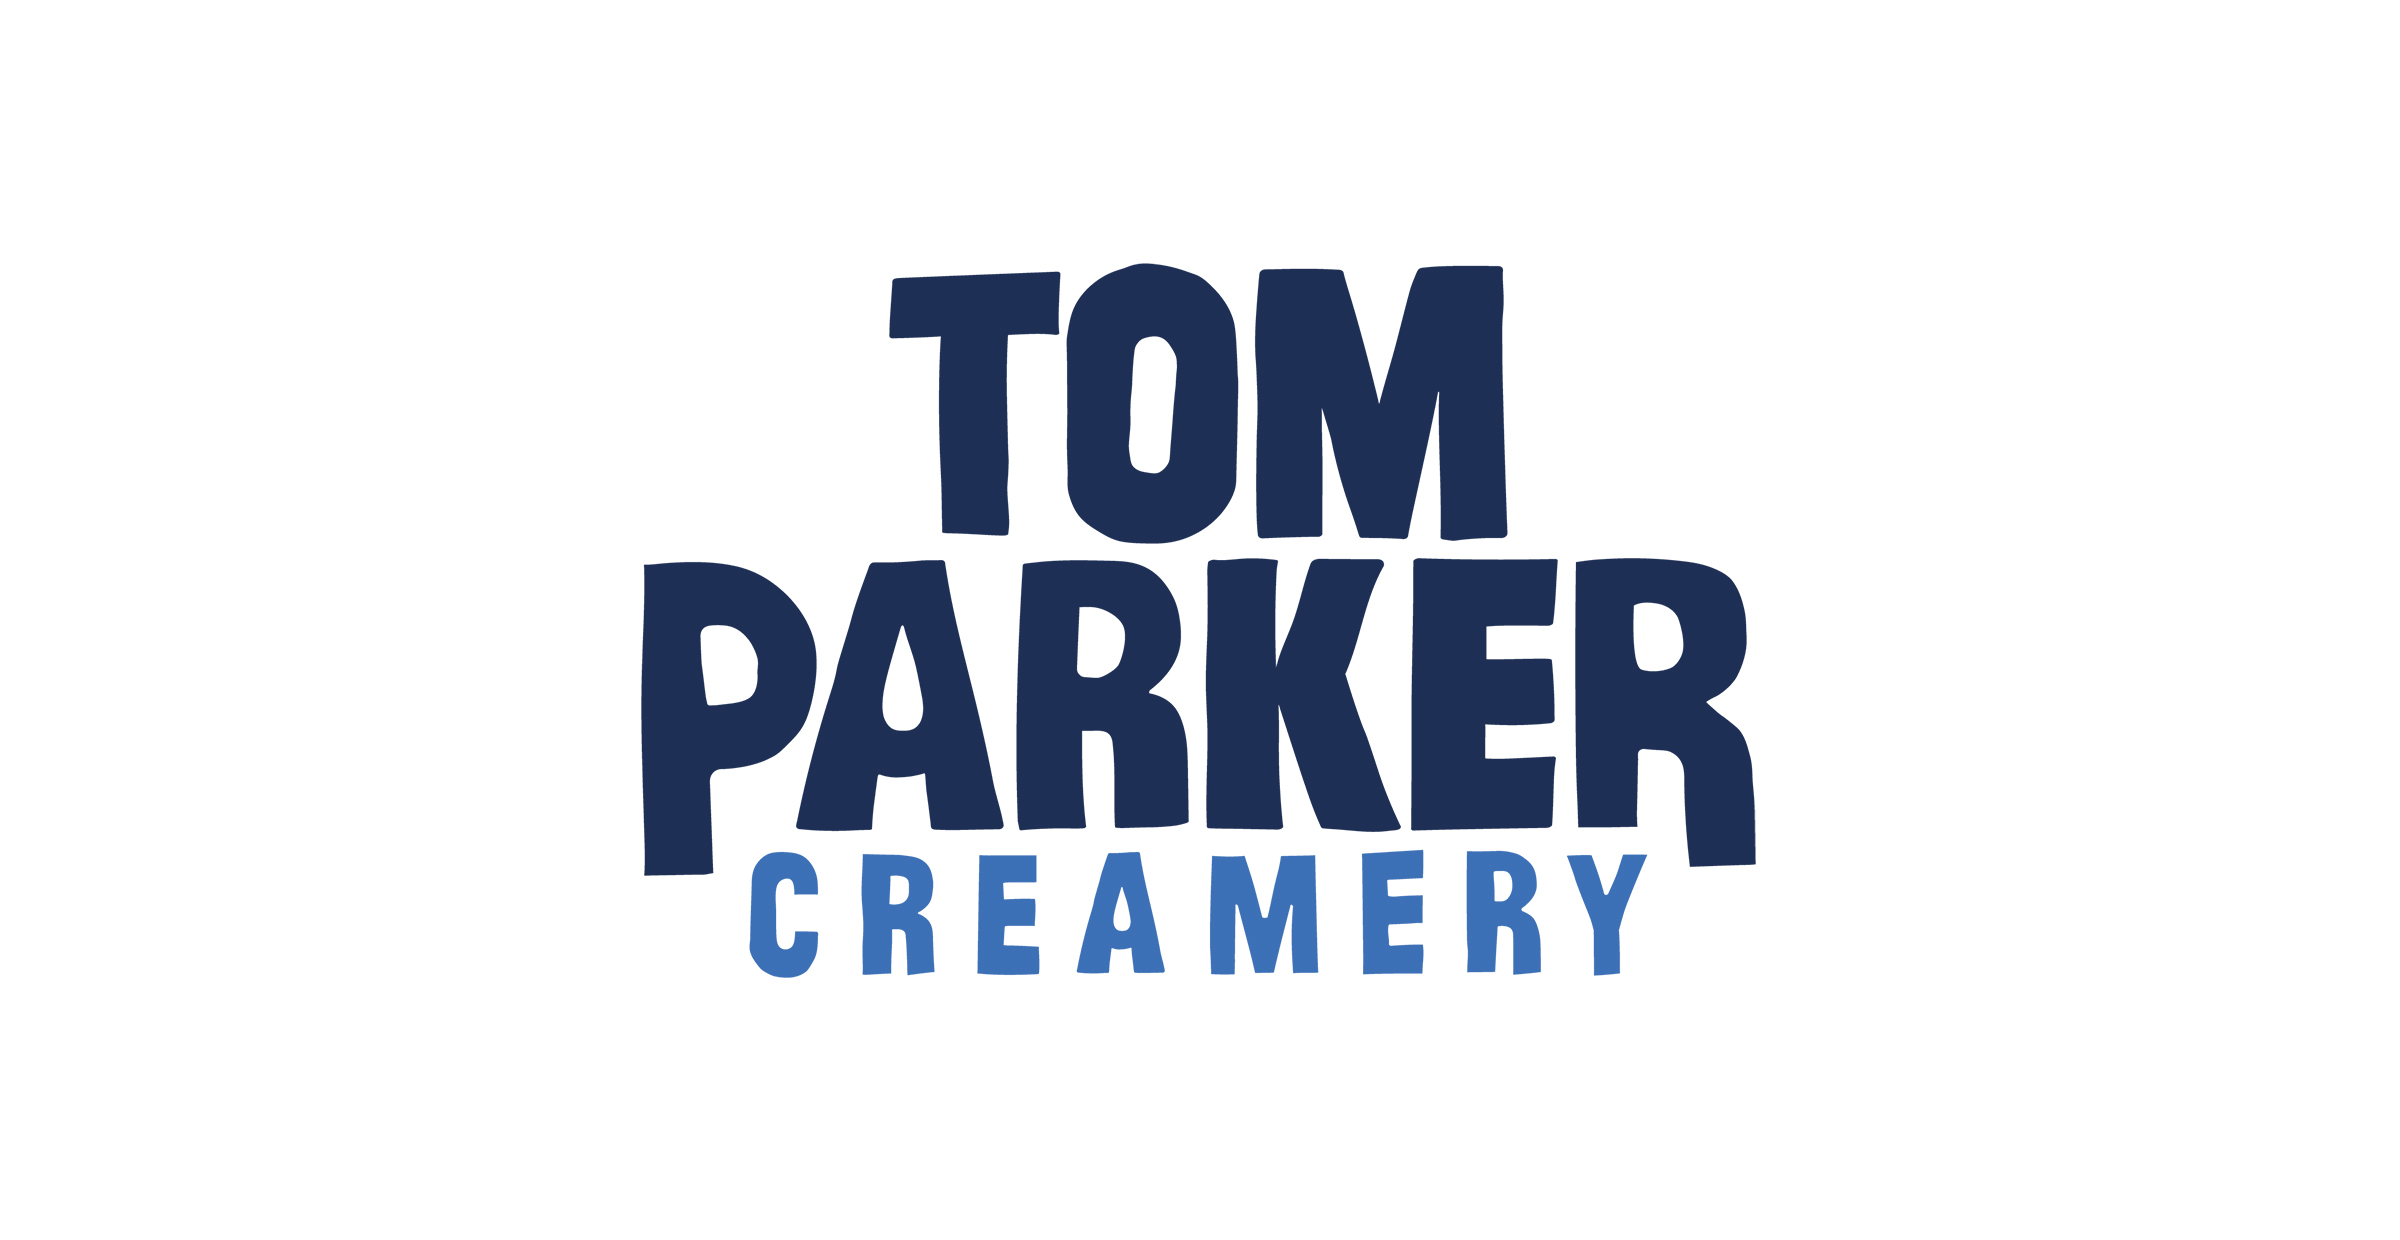 White Bear Creates New Brand Identity for Tom Parker Creamery